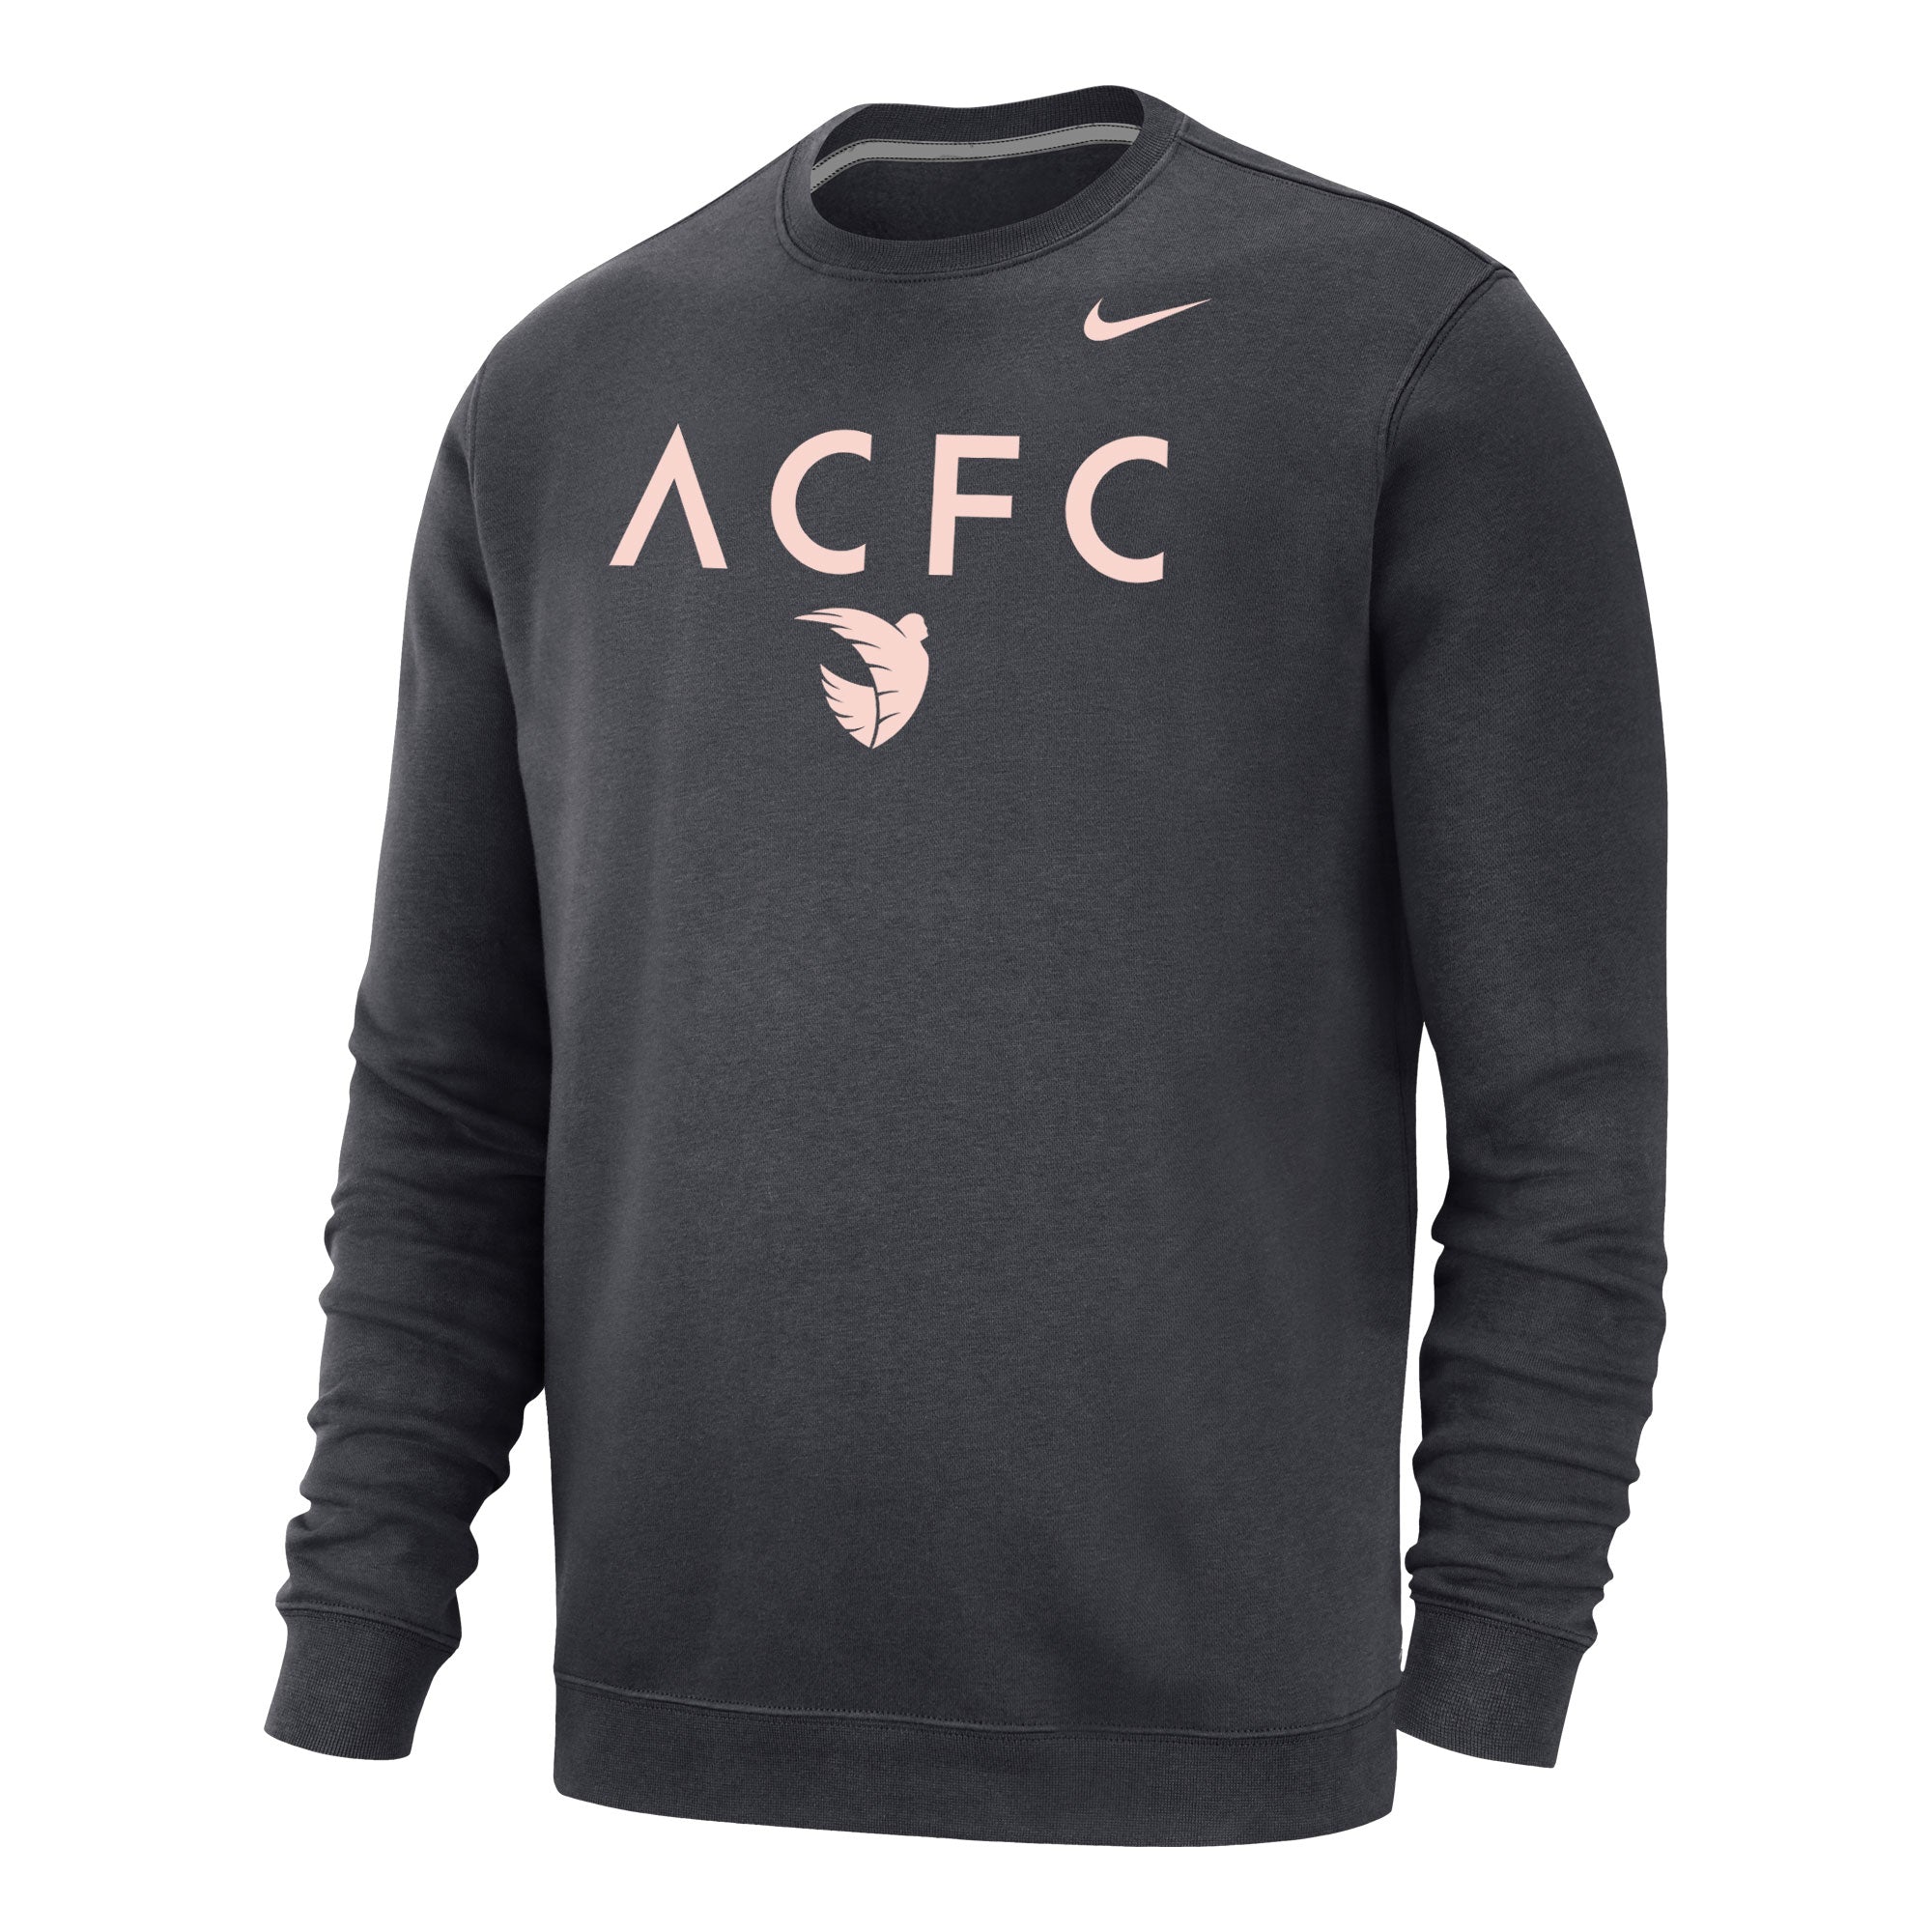 ACFC Nike Unisex Sol Rosa Anthracite Club Fleece Crew